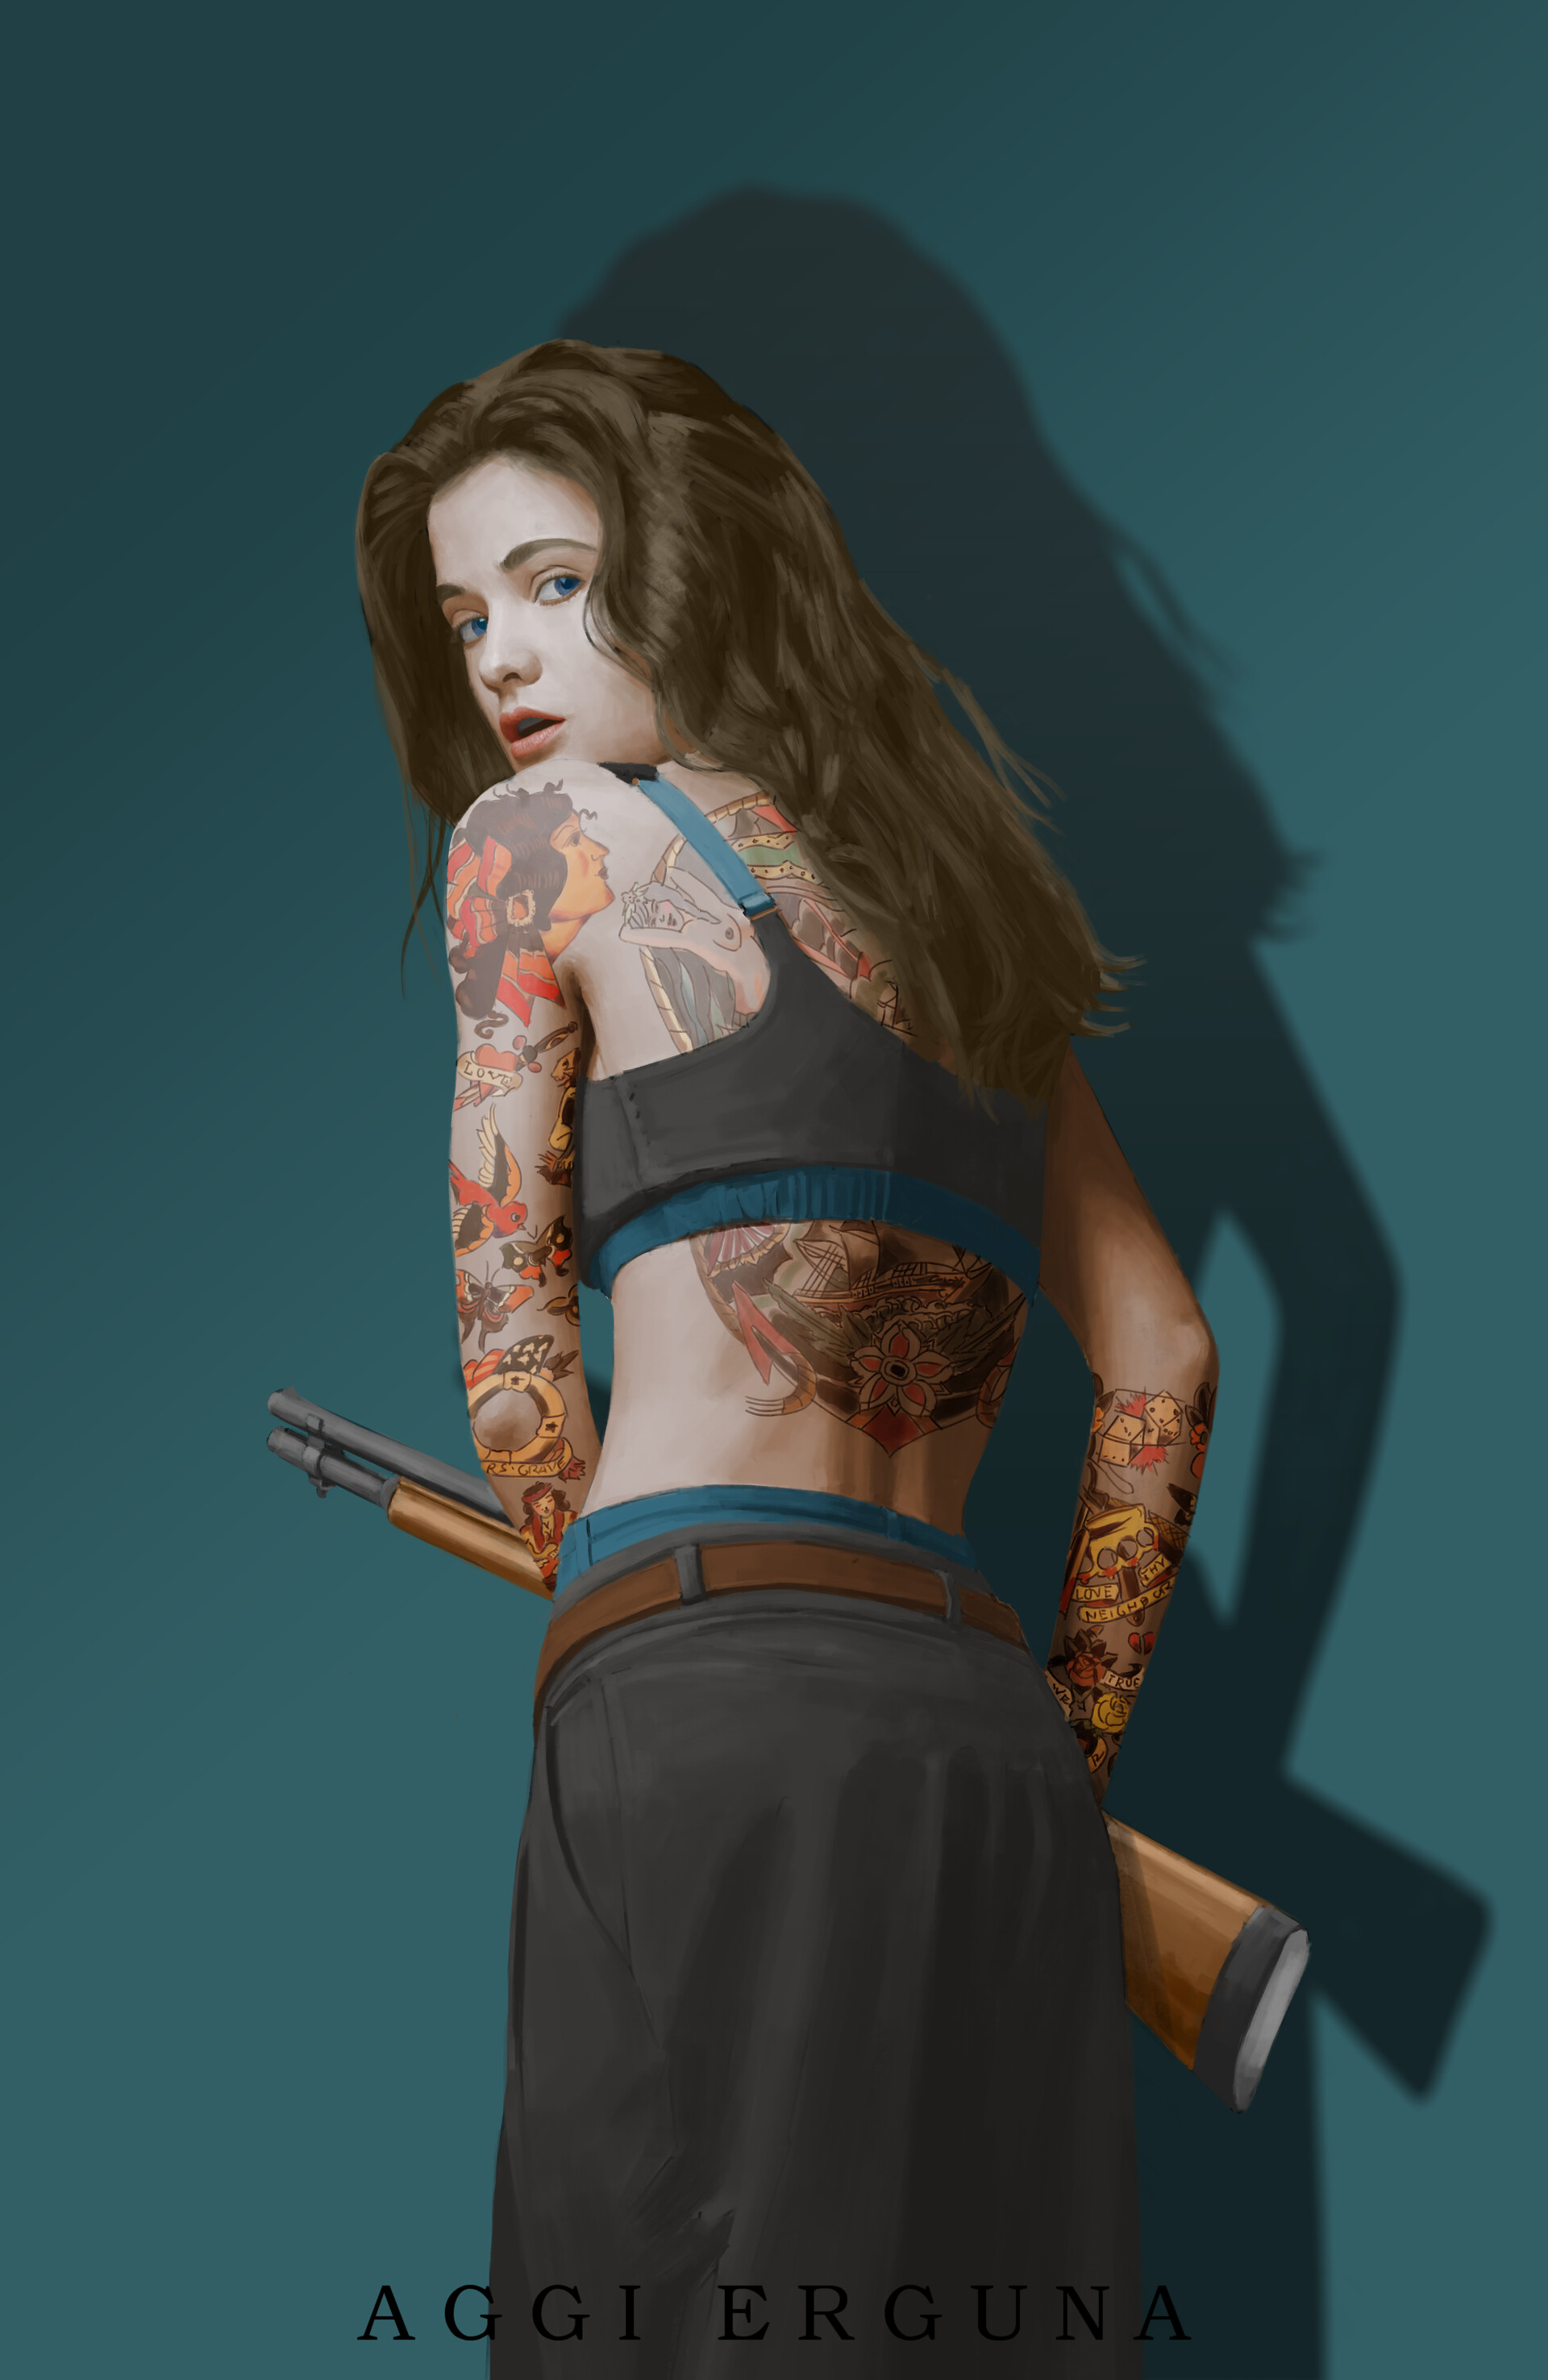 ArtStation Women Brunette Looking Back Blue Background Gun Portrait Display Tattoo Looking At Viewer 1920x2952